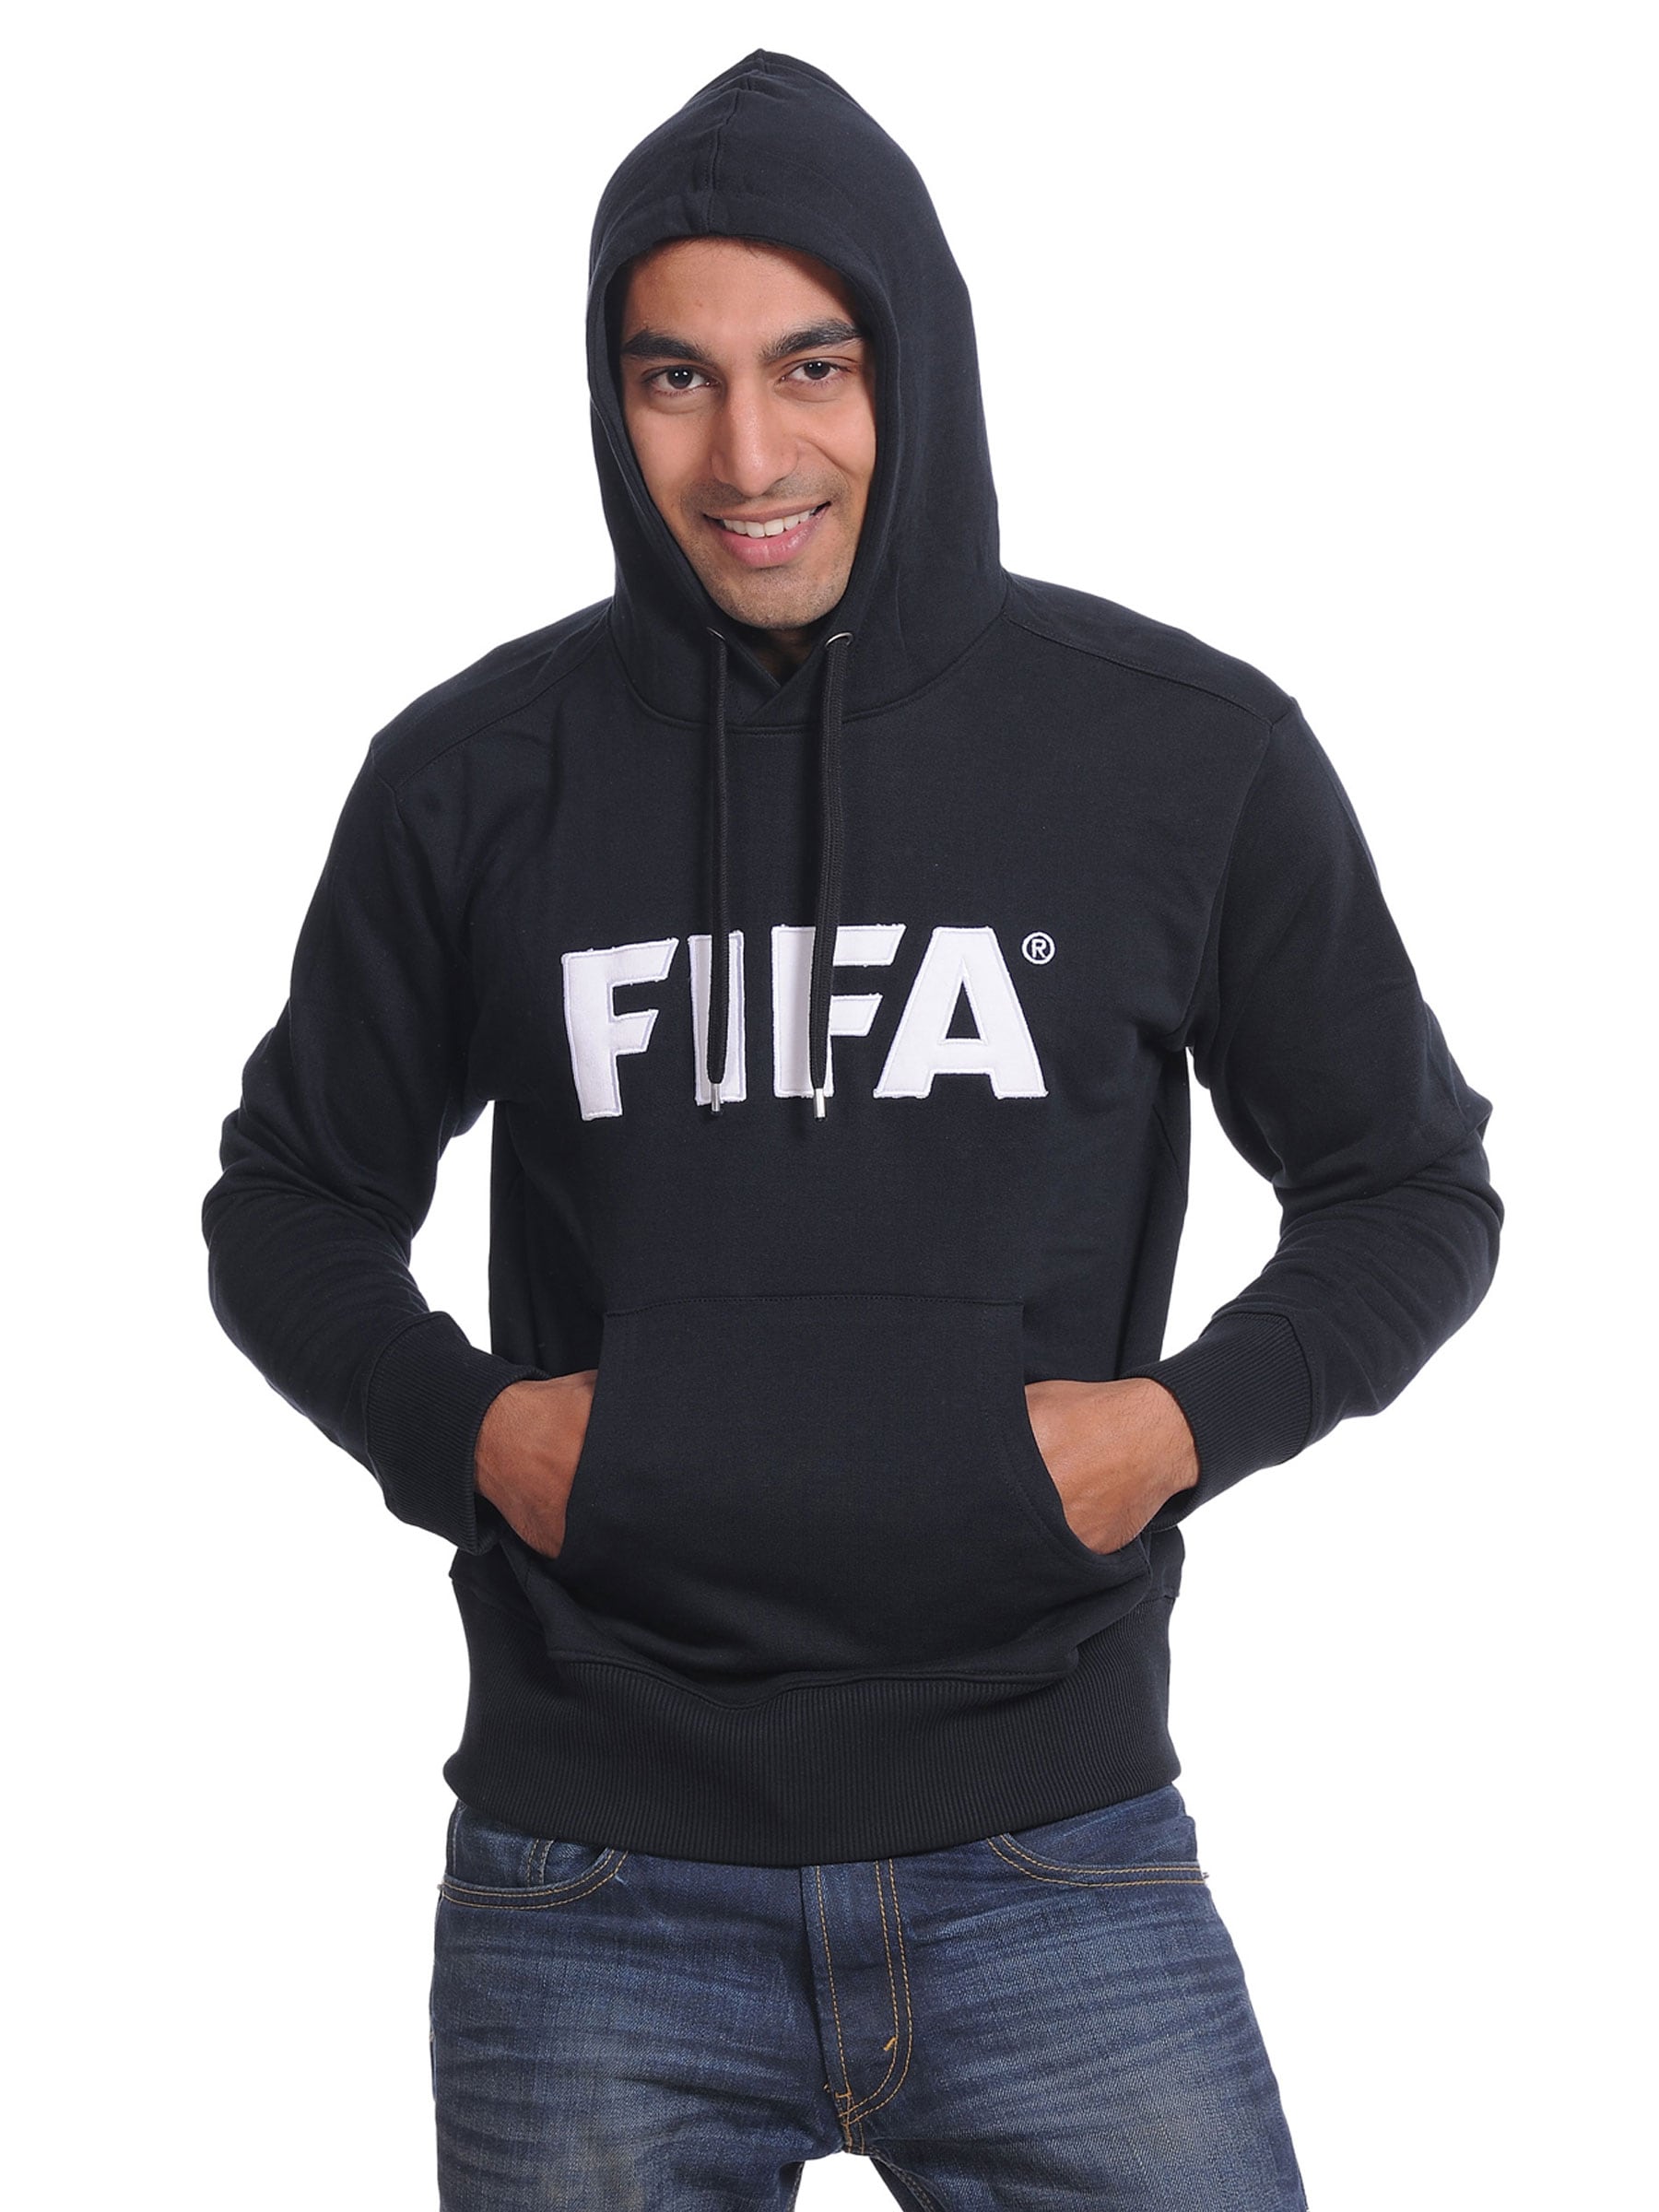 FIFA Men Full Sleeves Hoody Sweatshirt